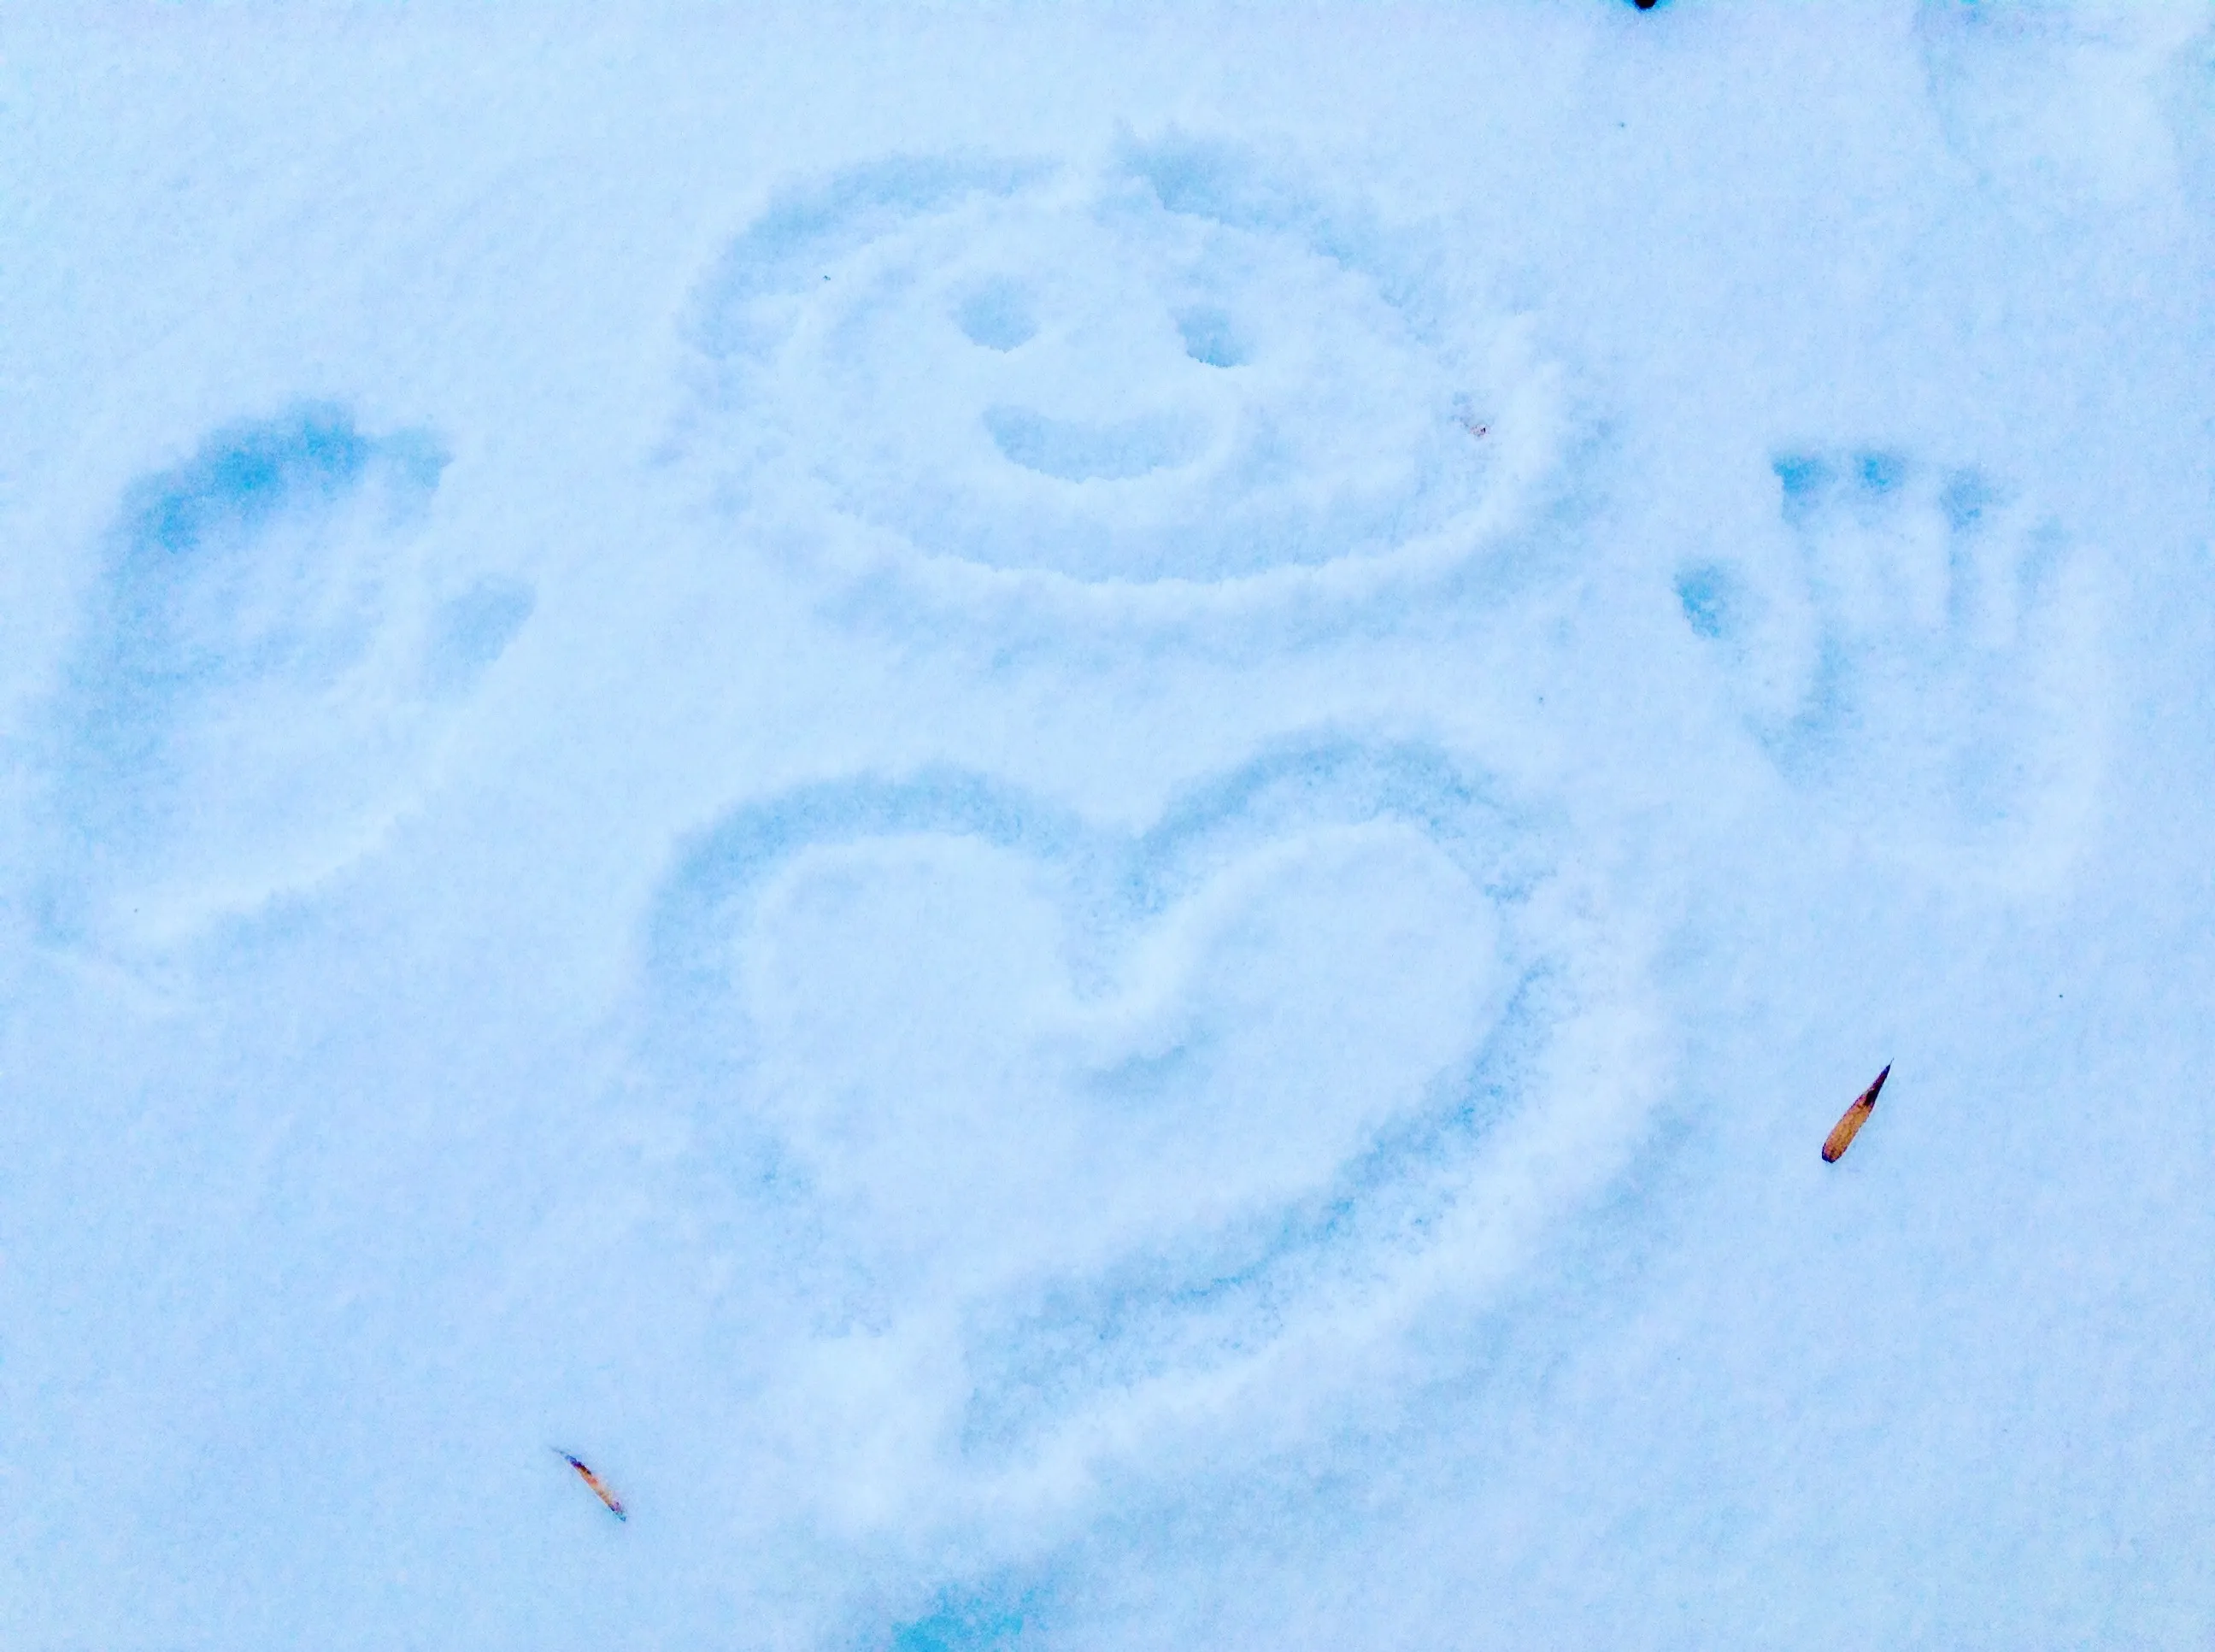 Рисование на снегу. Сердце нарисованное на снегу. Сердечко на снегу. Рисование солнца на снегу. День снега рисунок